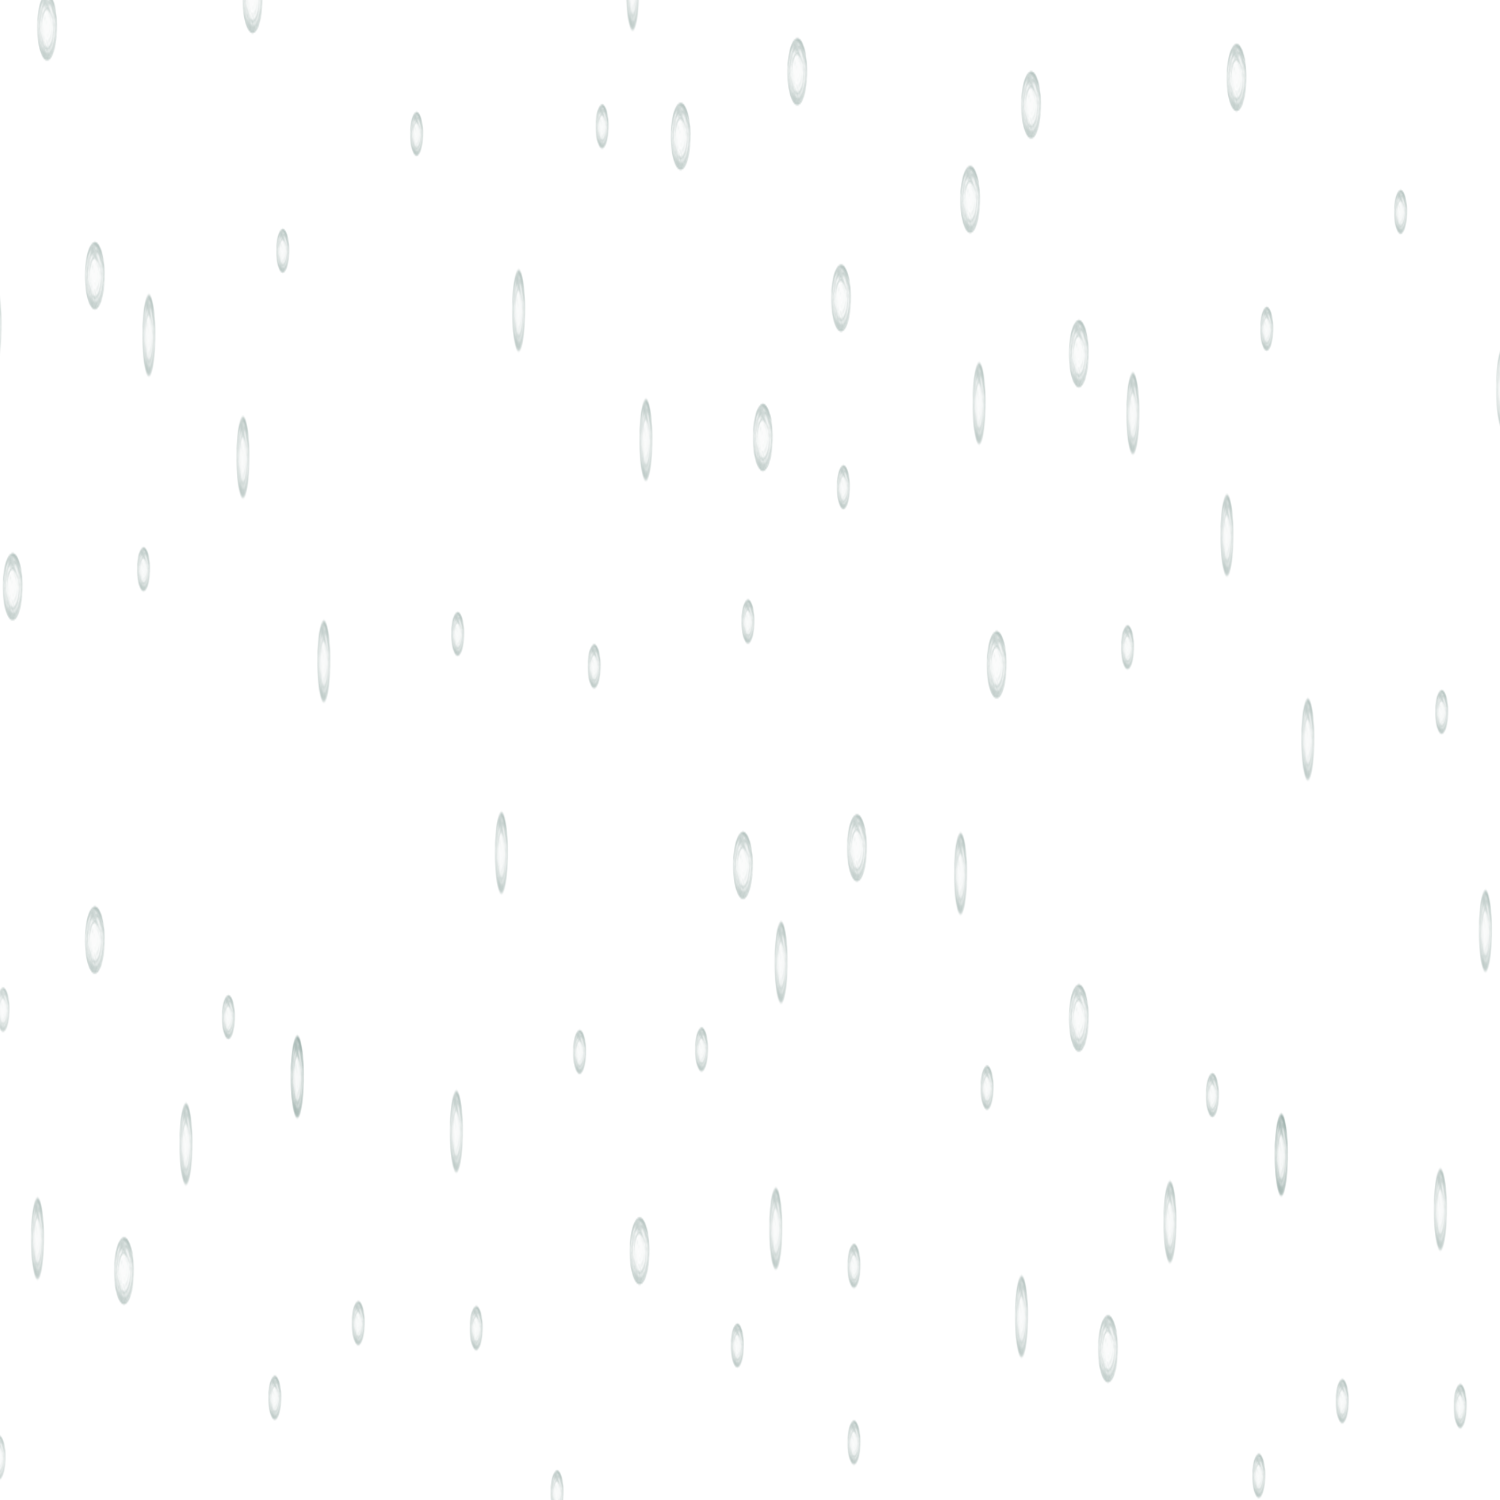 Rain PNG images free download, rain drops PNG.